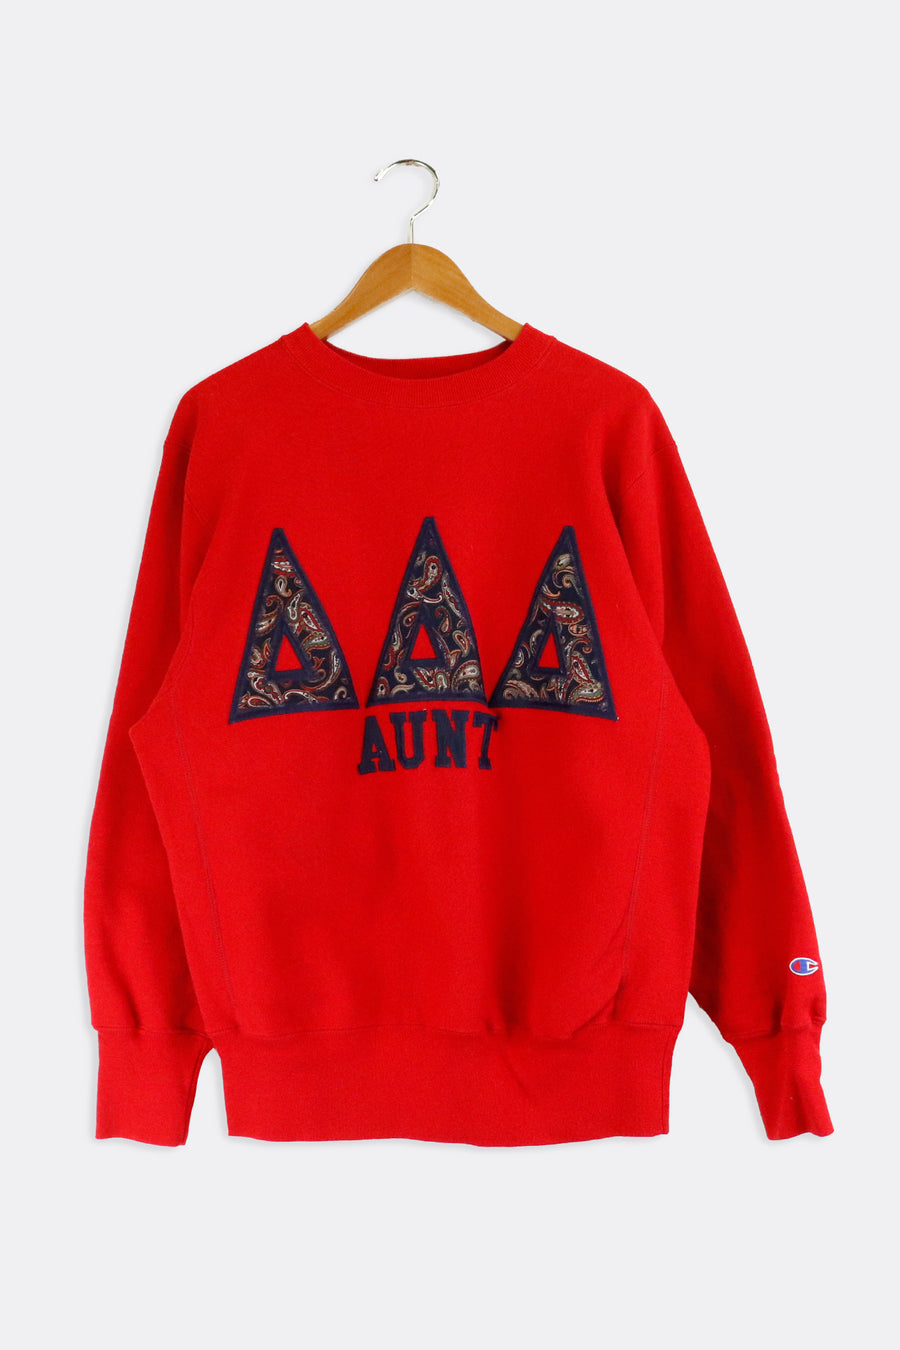 Vintage Champion Reverse Weave Aunt Sorority Stitched Sweatshirt Sz L